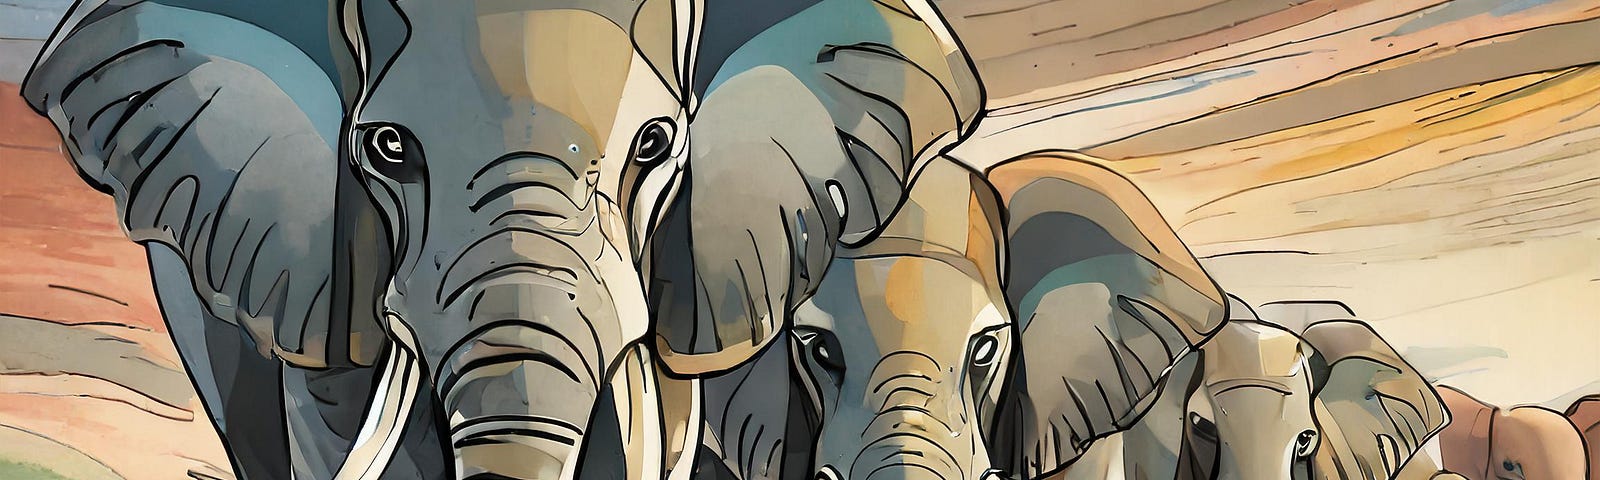 artwork of a group of elephants